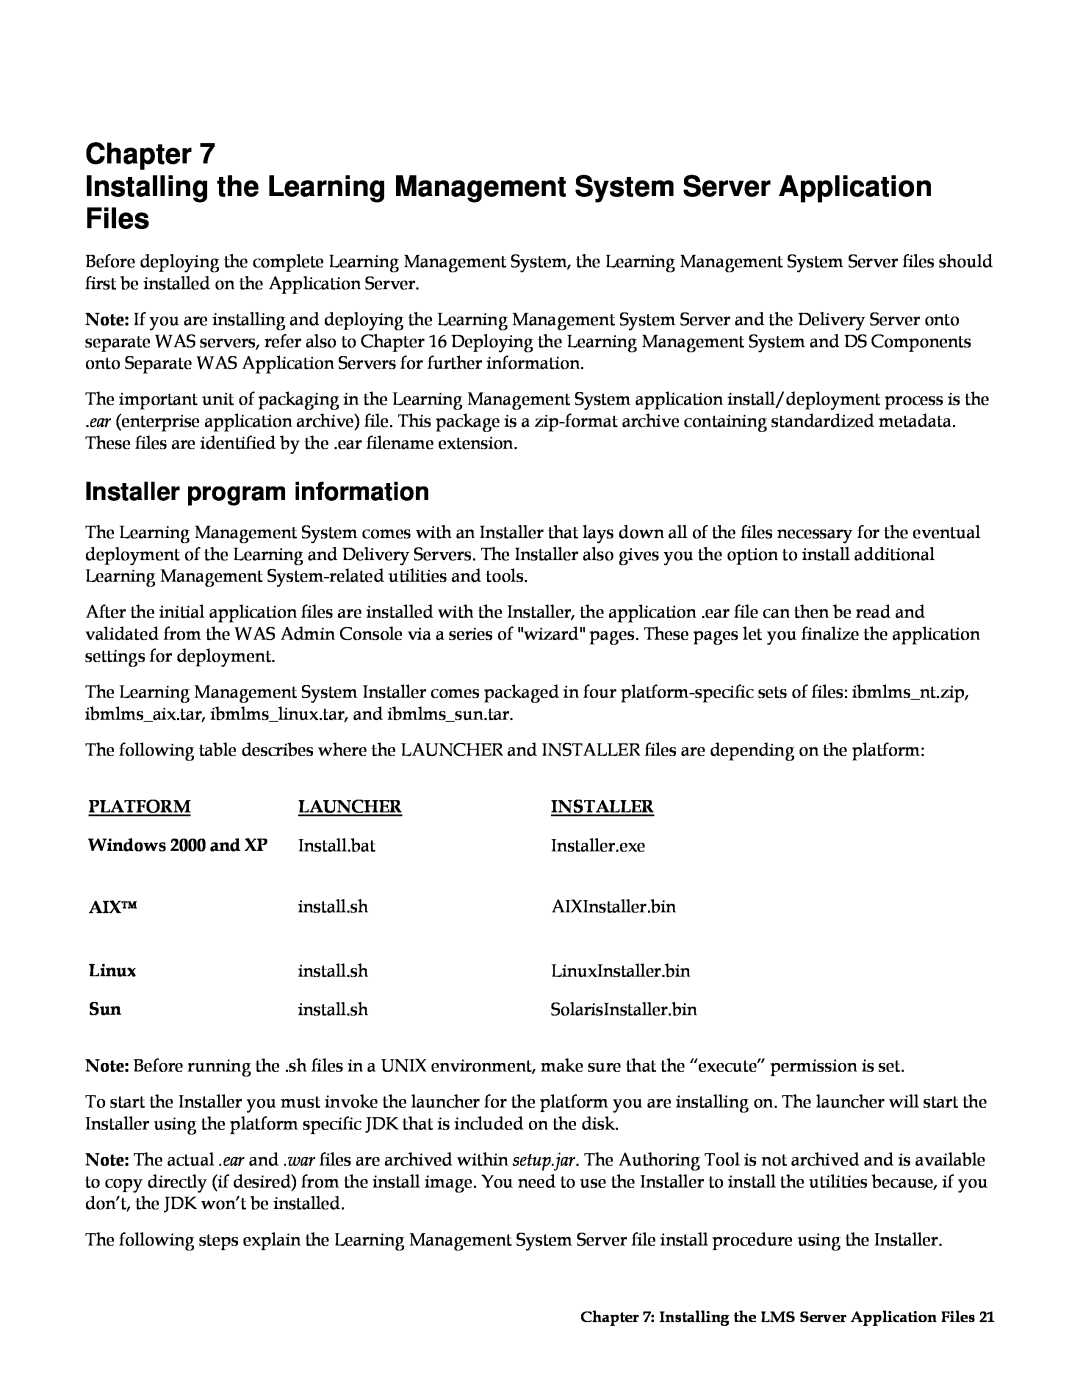 IBM G210-1784-00 Chapter Installing the Learning Management System Server Application, Files, Platform, Launcher, Linux 